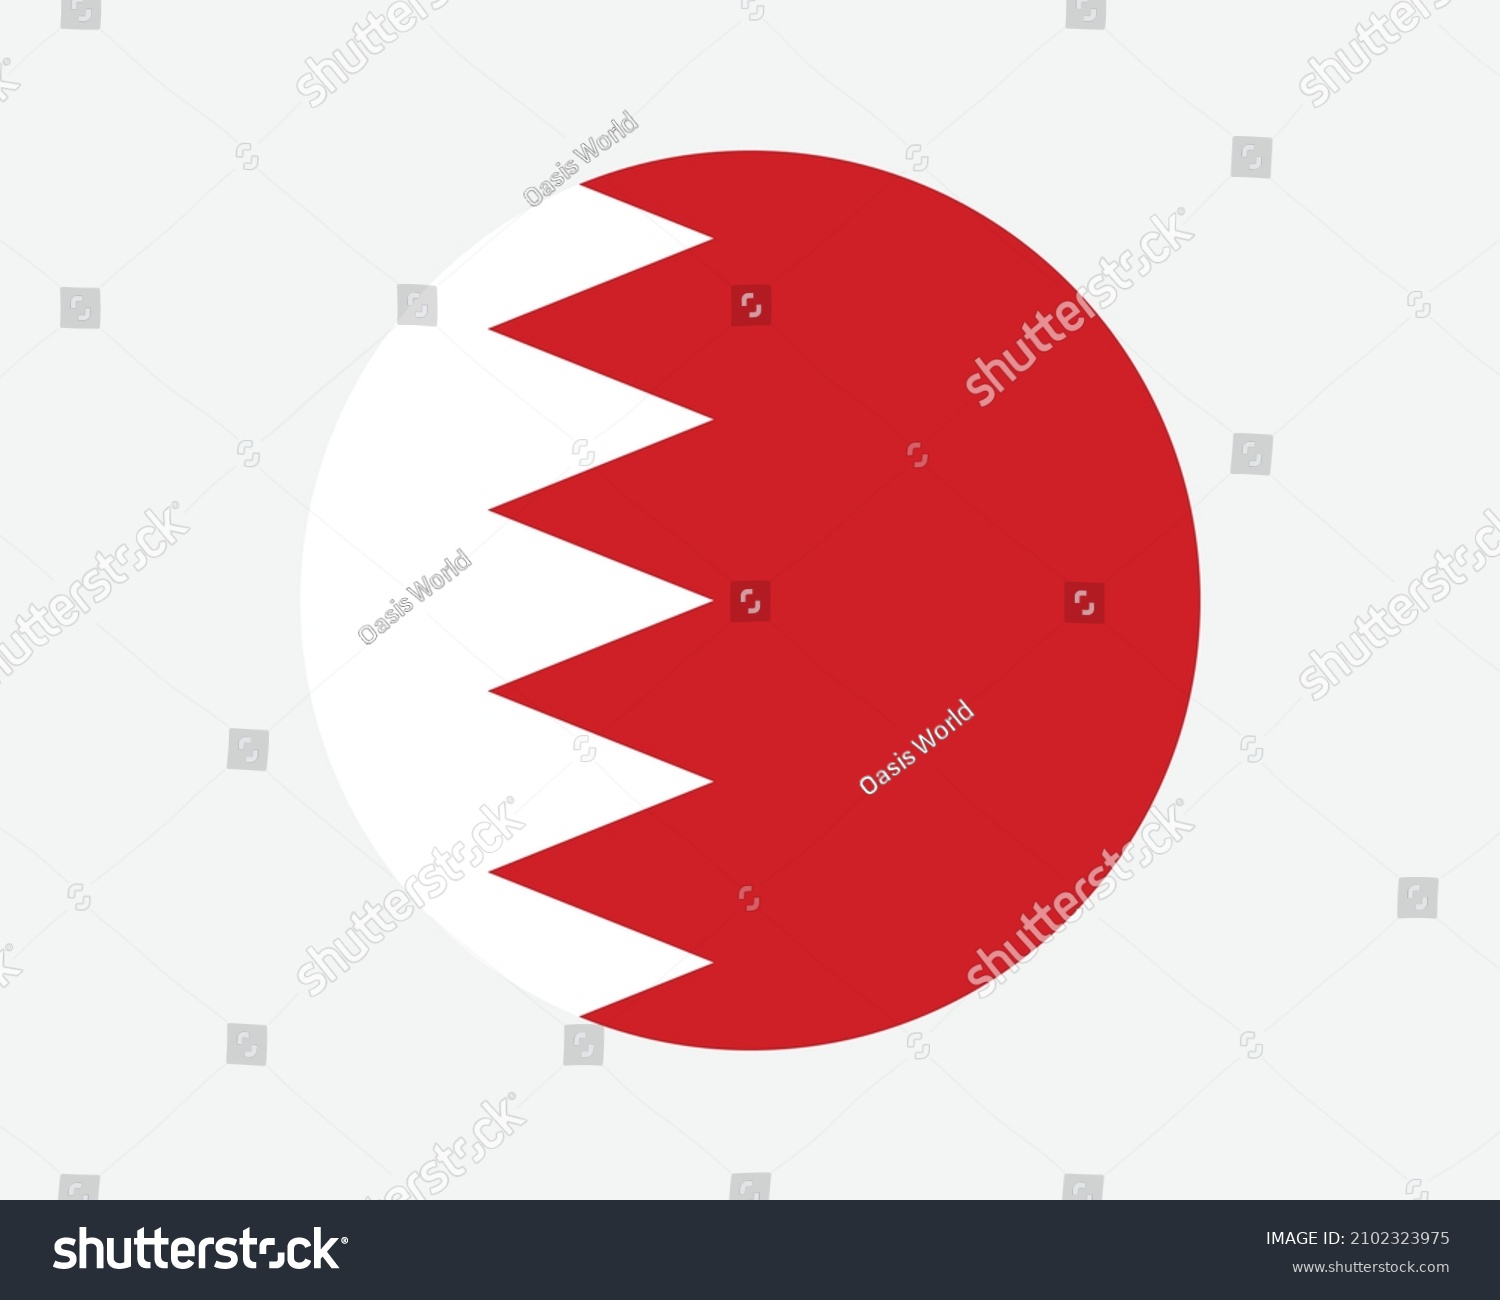 SVG of Bahrain Round Country Flag. Circular Bahraini National Flag. Kingdom of Bahrain Circle Shape Button Banner. EPS Vector Illustration. svg